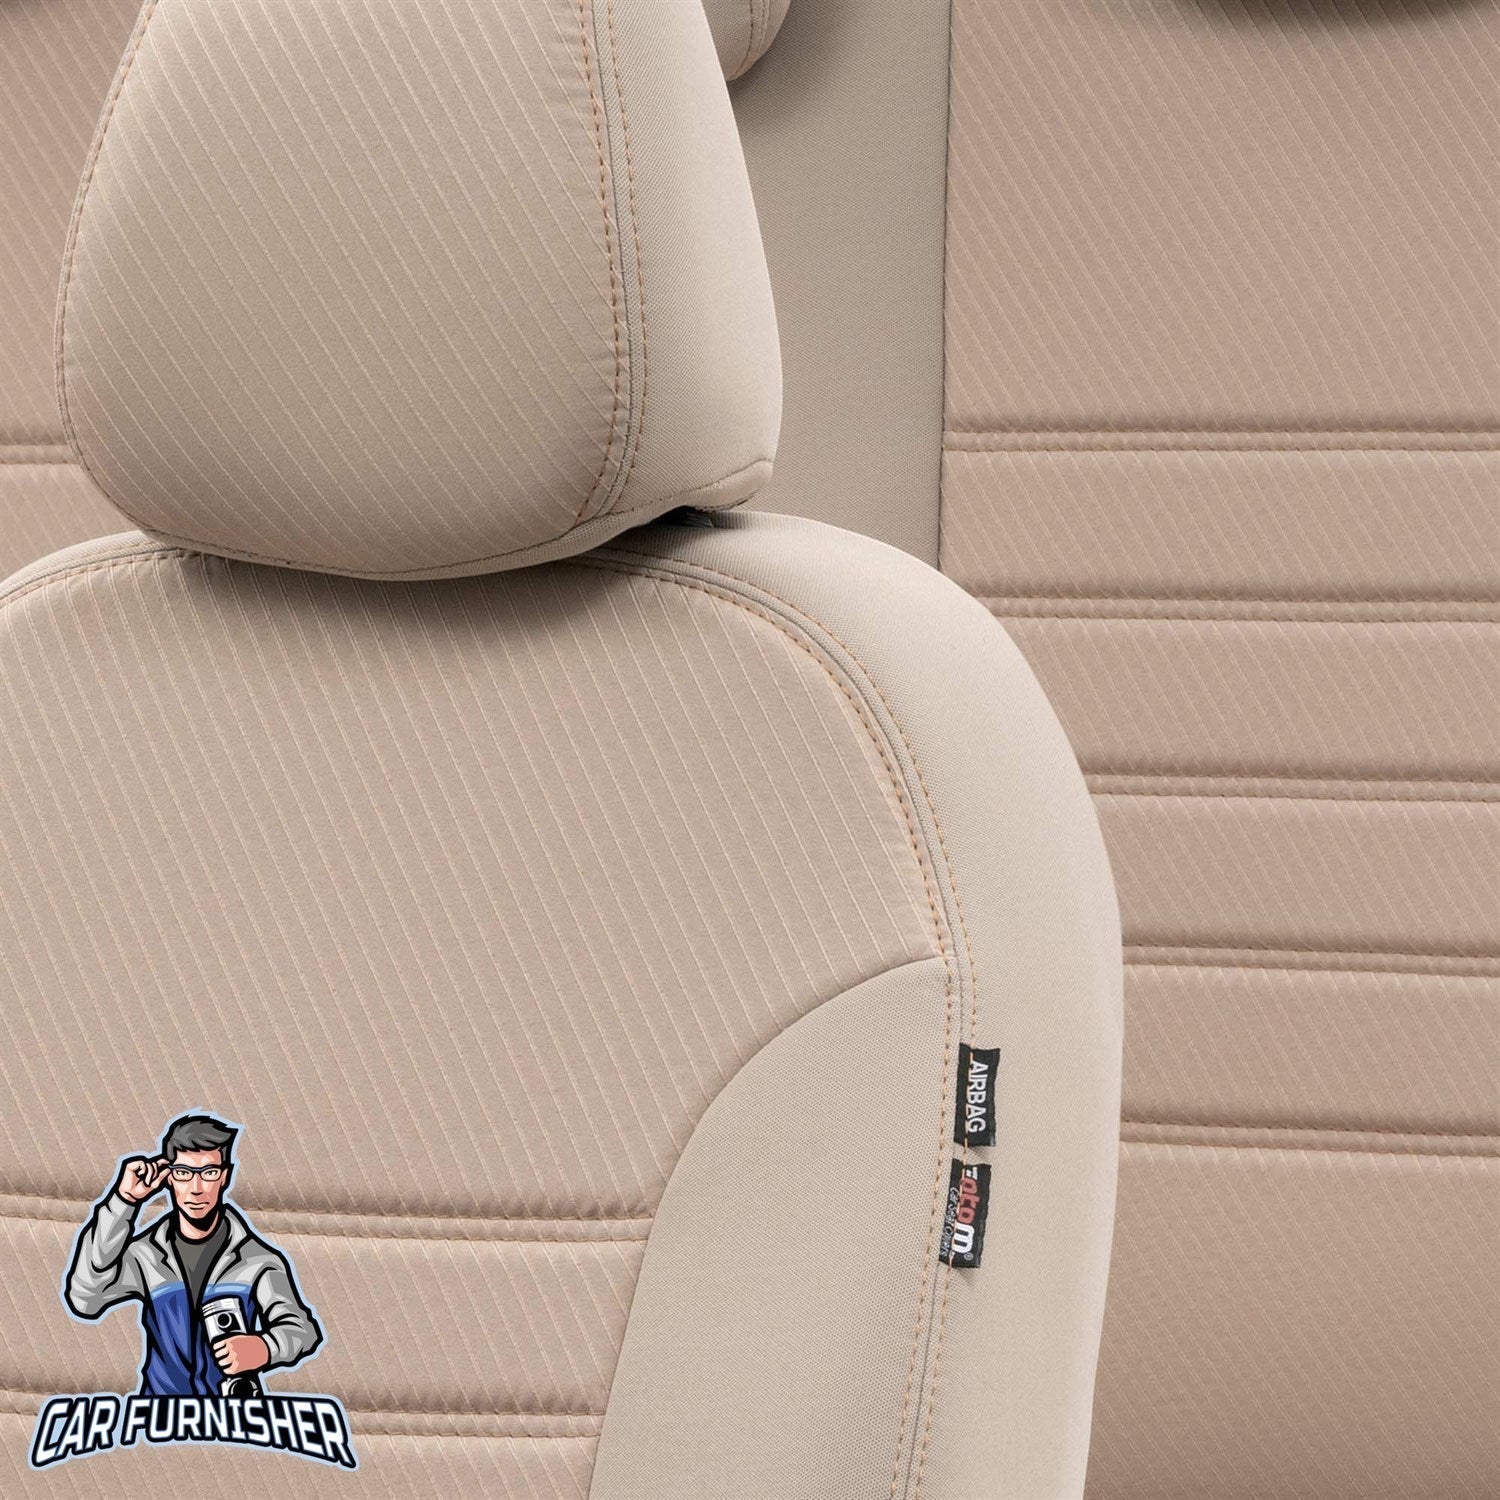 Nissan NV300 Seat Cover New York Leather Design Dark Beige Jacquard Fabric